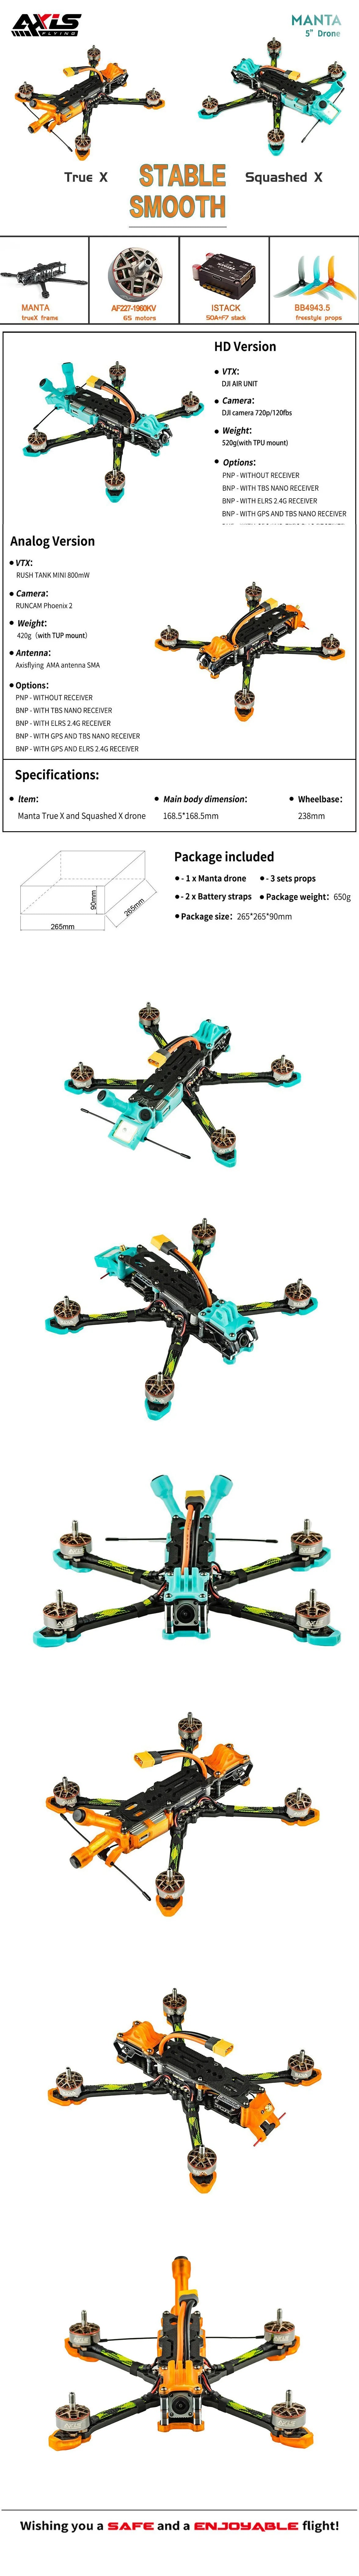 Axisflying MANTA 5'', Manta True Xand Squashed drone 168.5*168.5mm 238